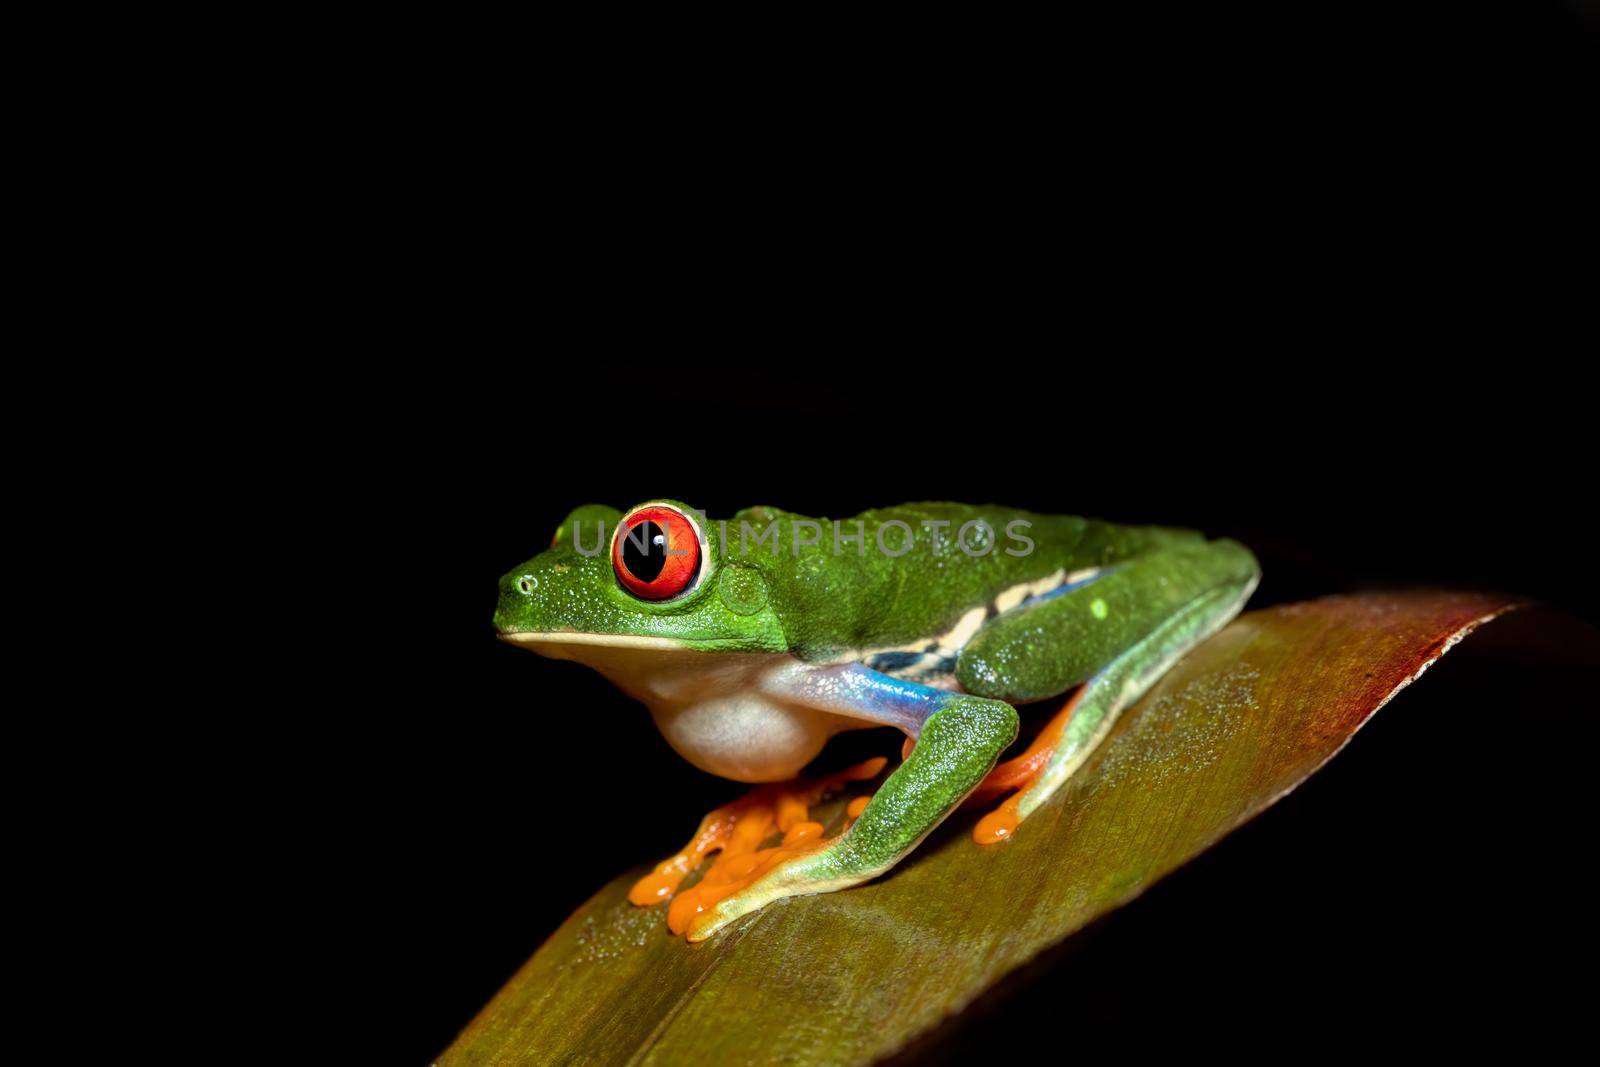 Red-eyed tree frog, Agalychnis callidryas, Cano Negro, Costa Rica wildlife by artush